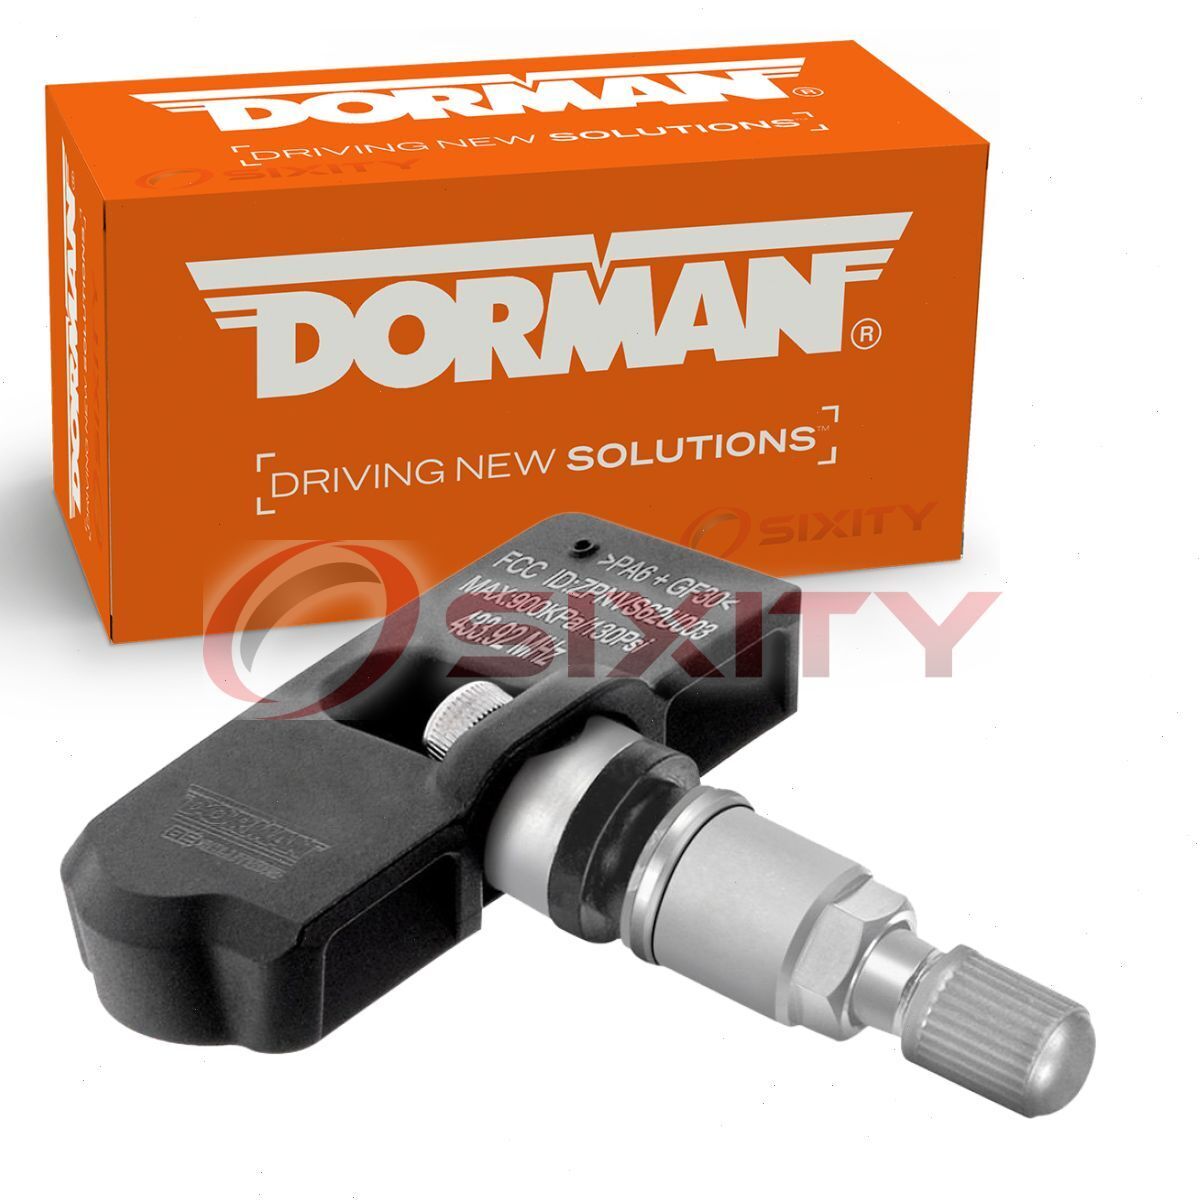 Dorman TPMS Programmable Sensor for 2014 BMW 535d Tire Pressure Monitoring yj